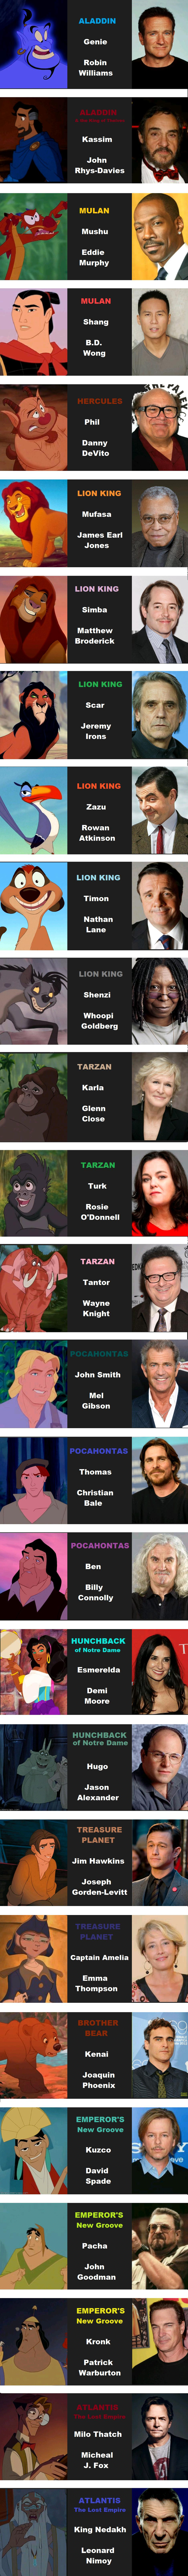 Disney Voice Actors